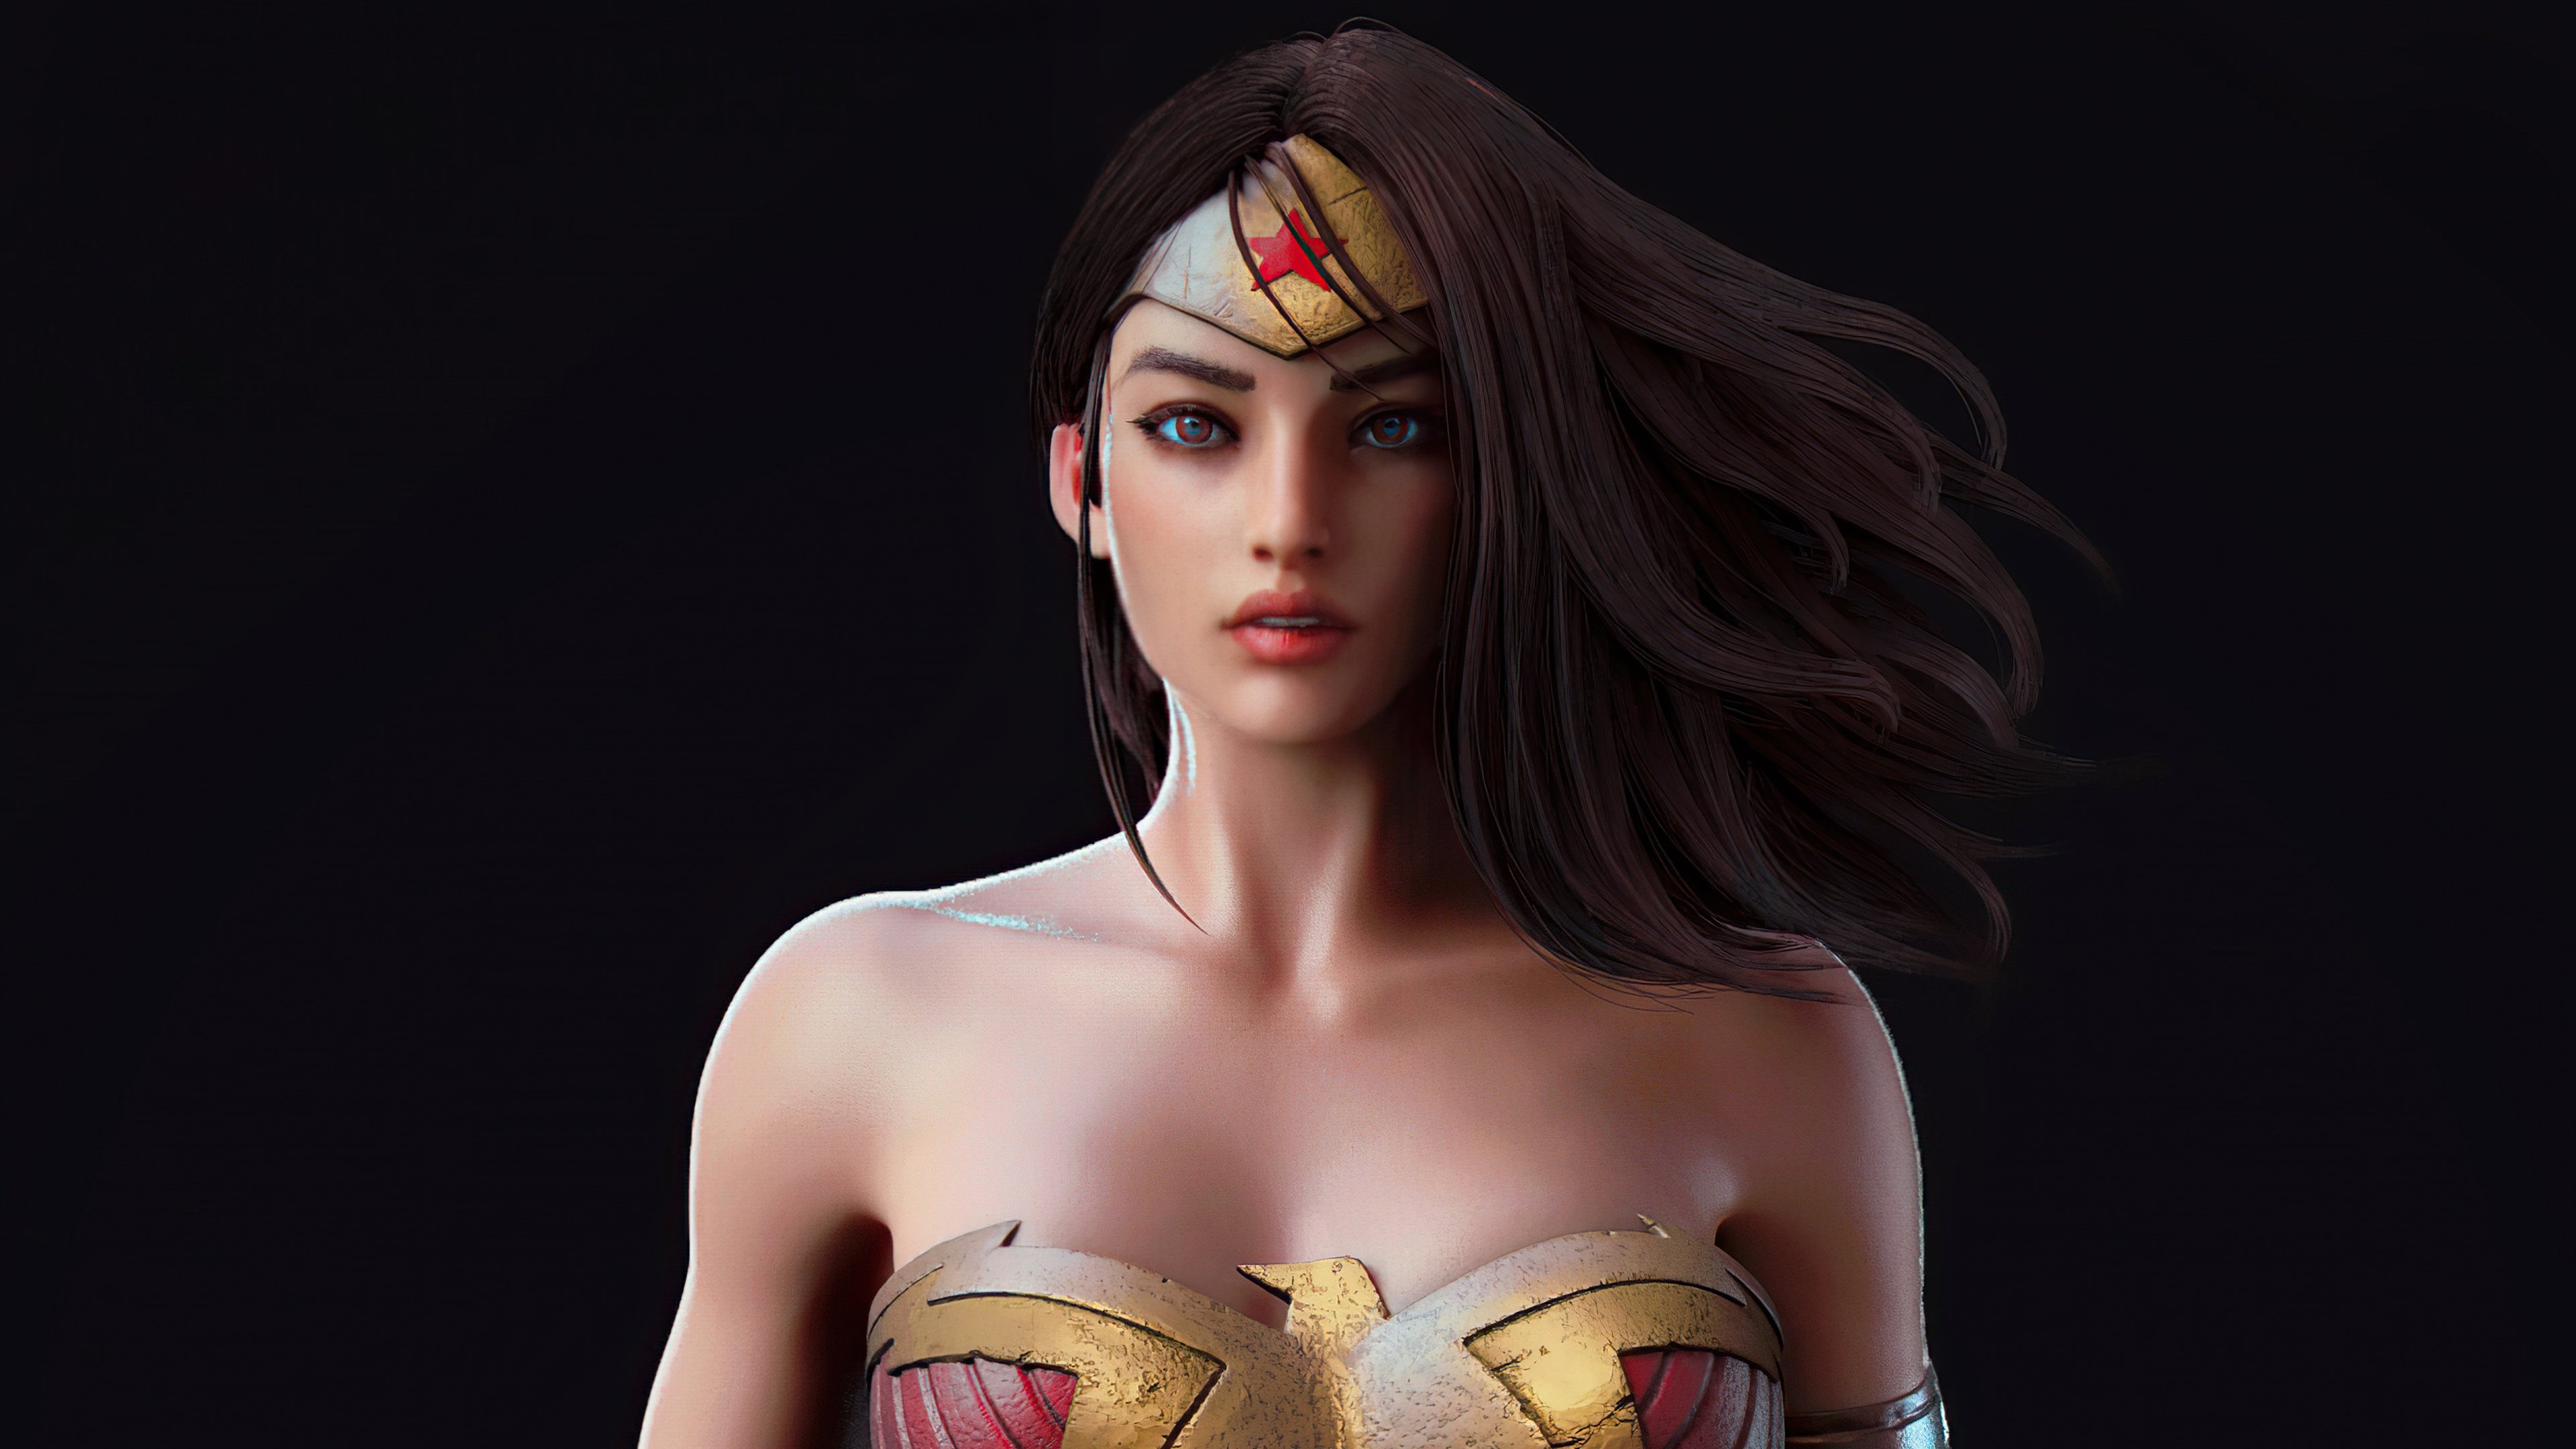 Fondos de pantalla Wonder woman Fanart 2021